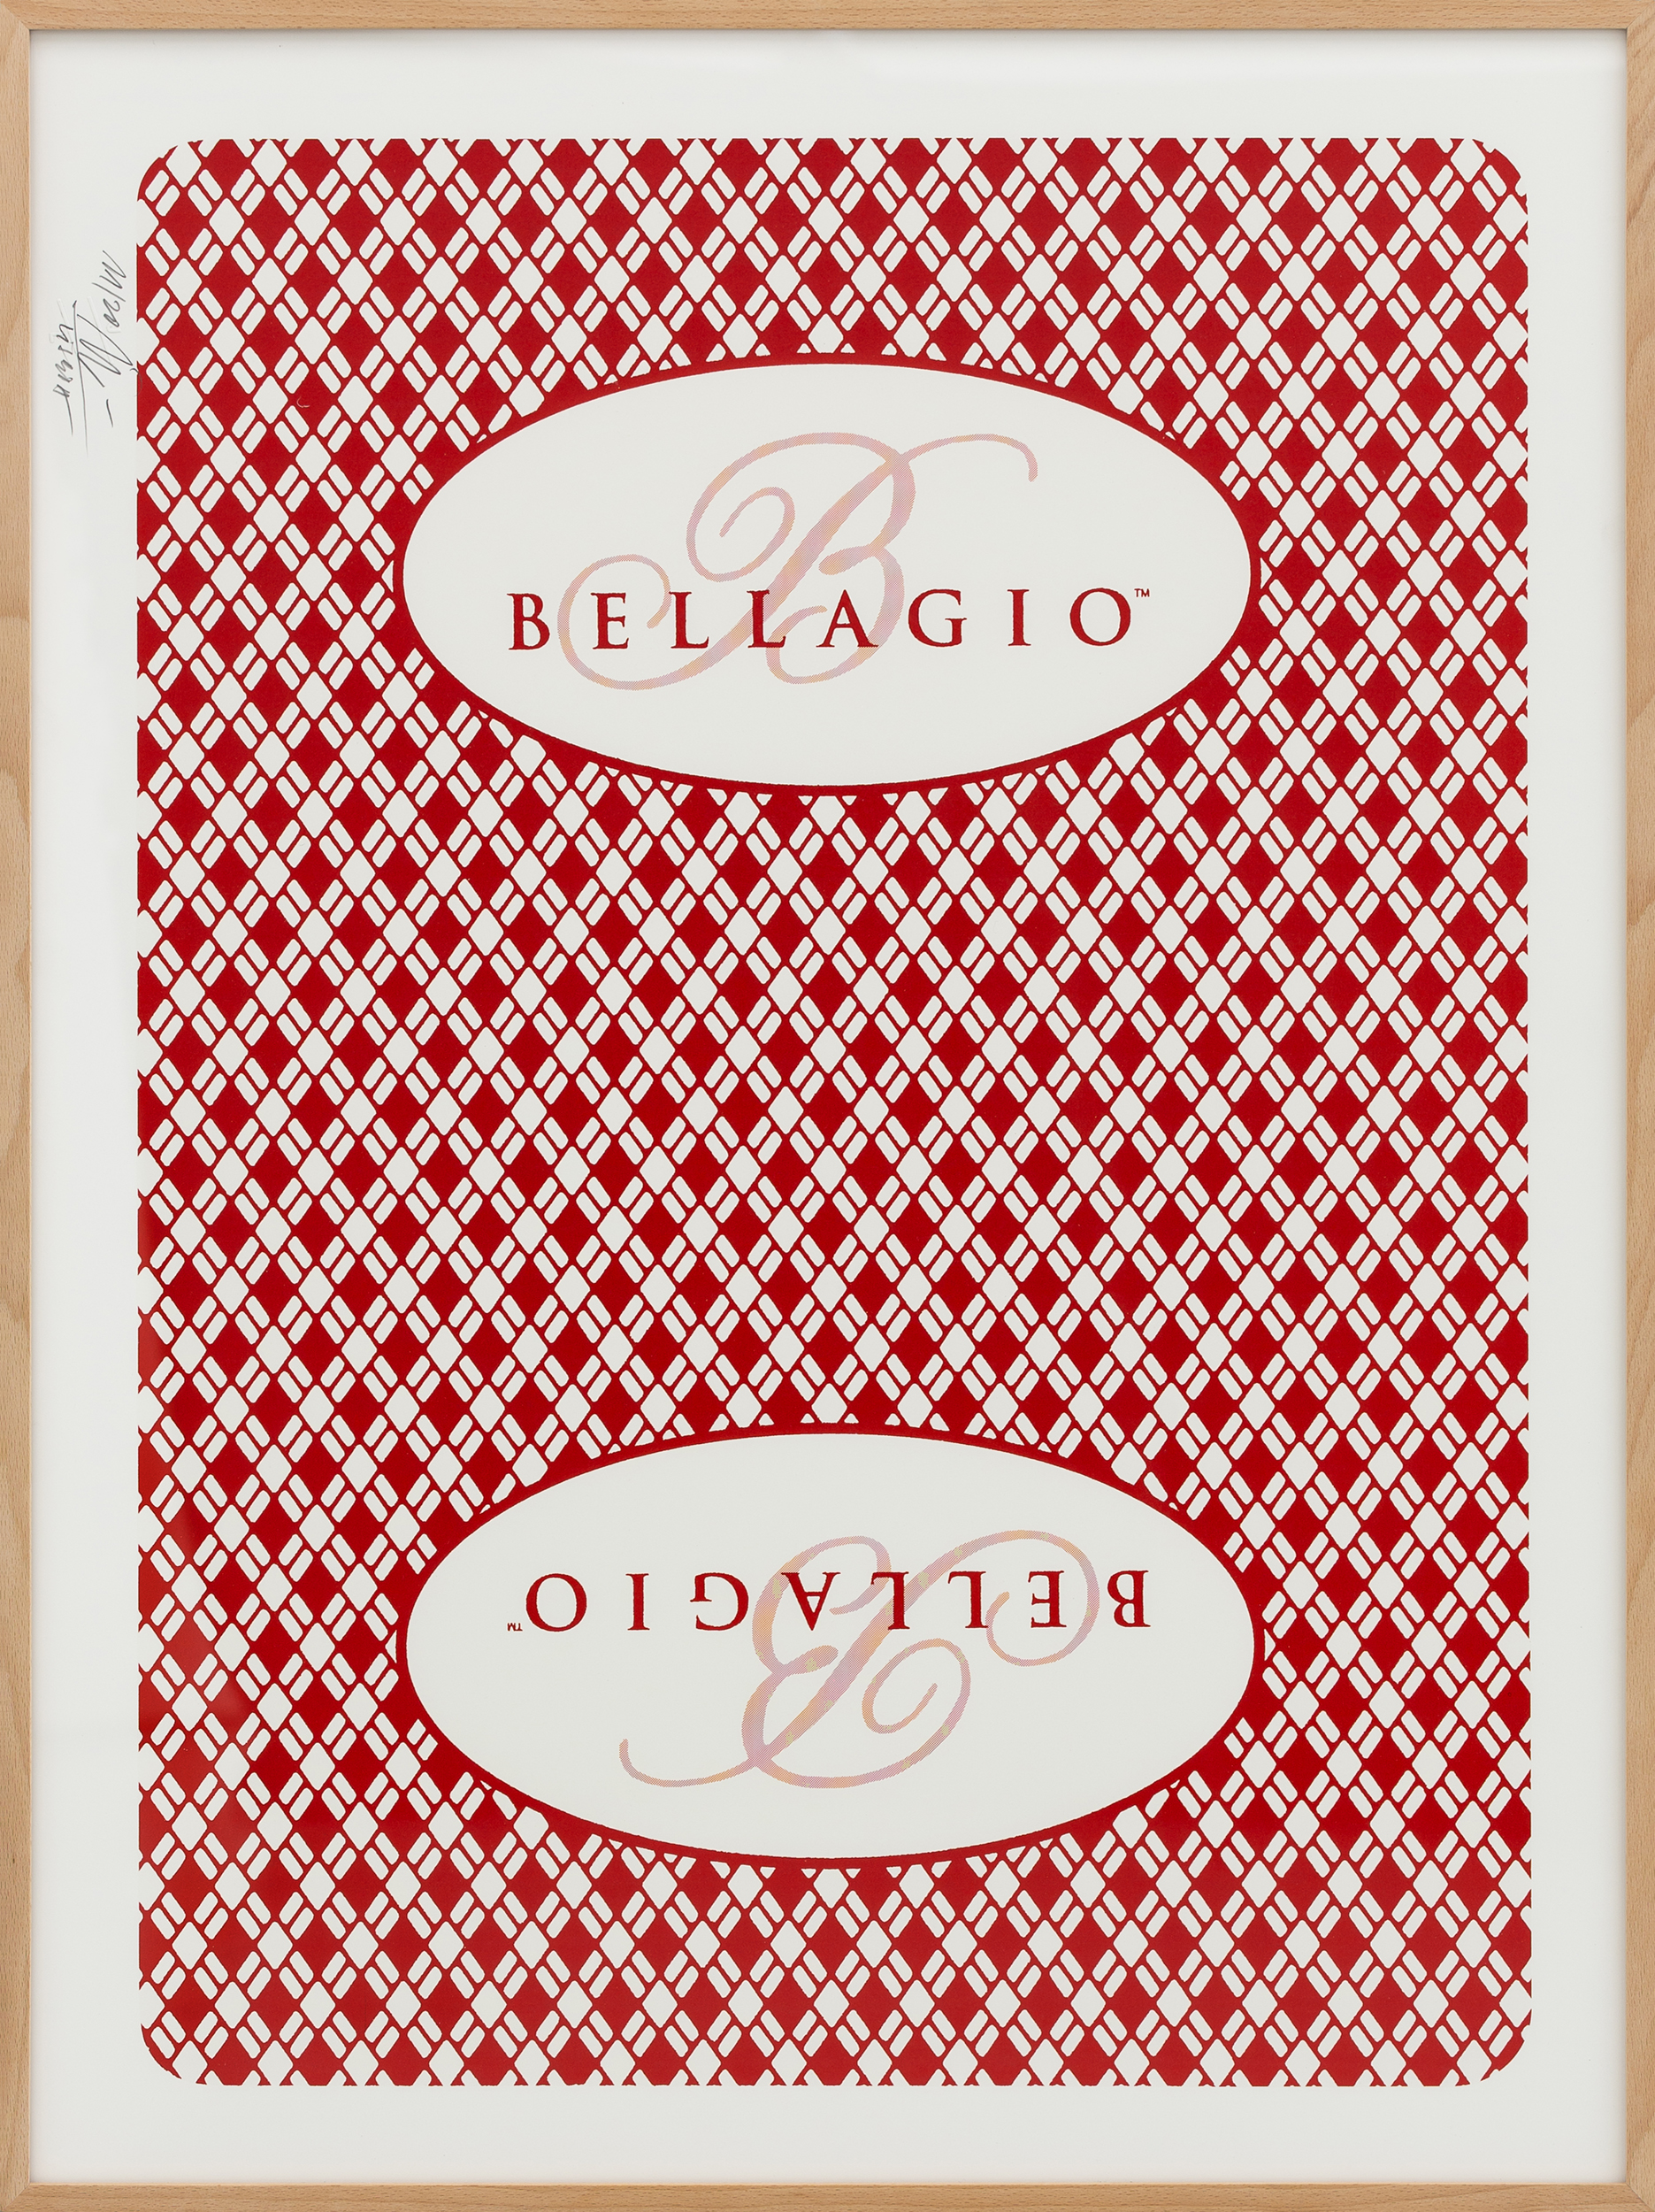 João Louro, Bellagio Vermelho, 2020. Screen-print on paper. 94 x 70 cm
